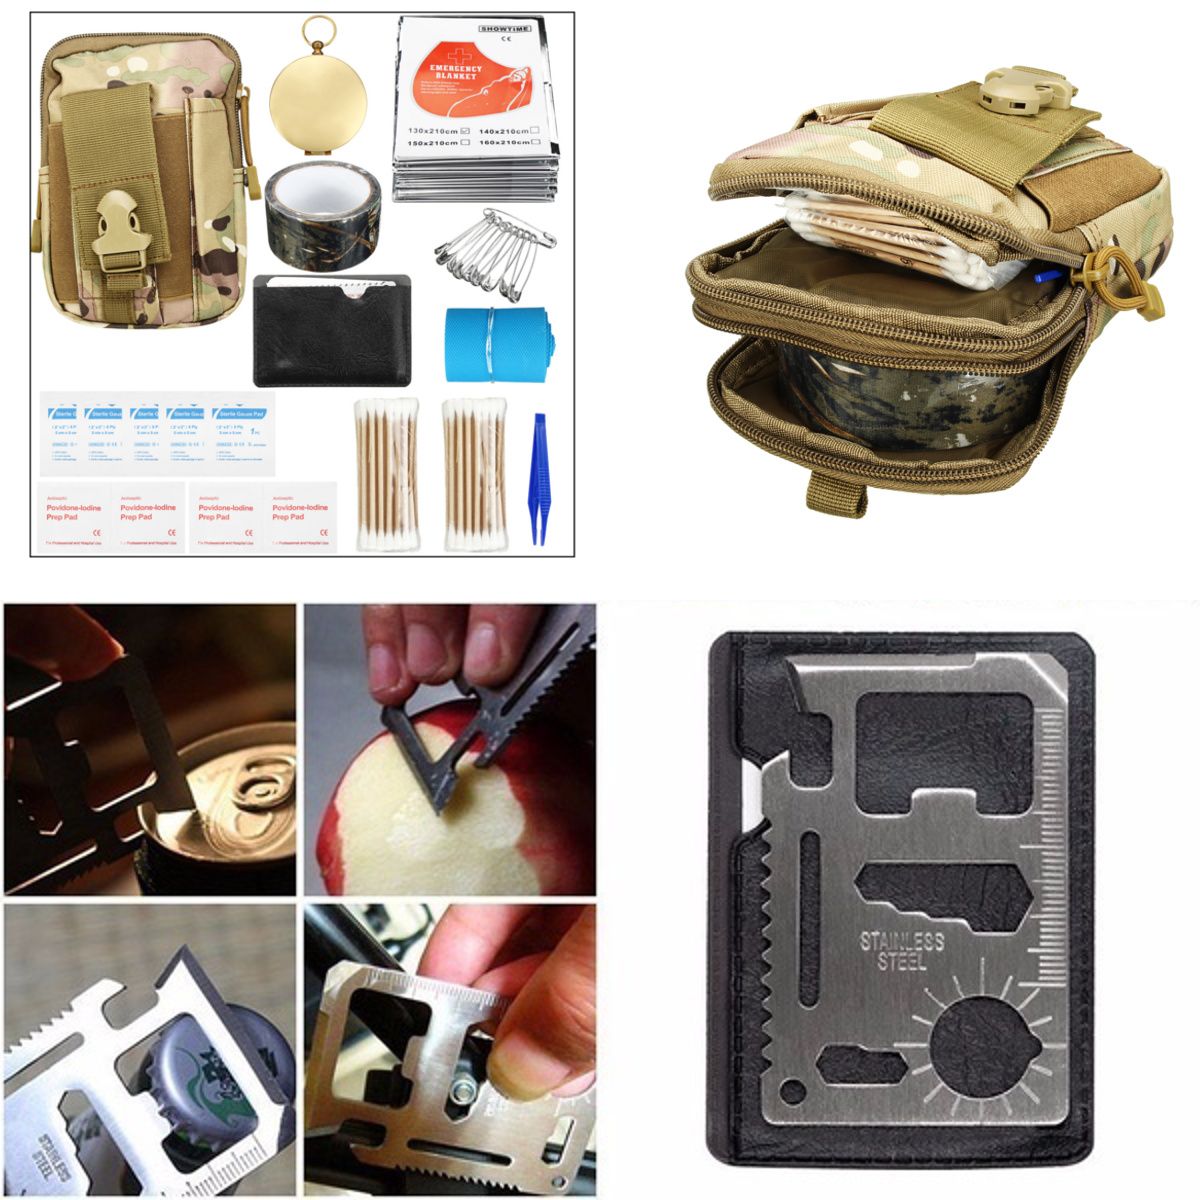 185Pcs-Survival-Tools-Kit-Emergency-Survival-Kit-Multi-Tools-First-Aid-Supplies-Survival-Gear-EDC-Ga-1427132